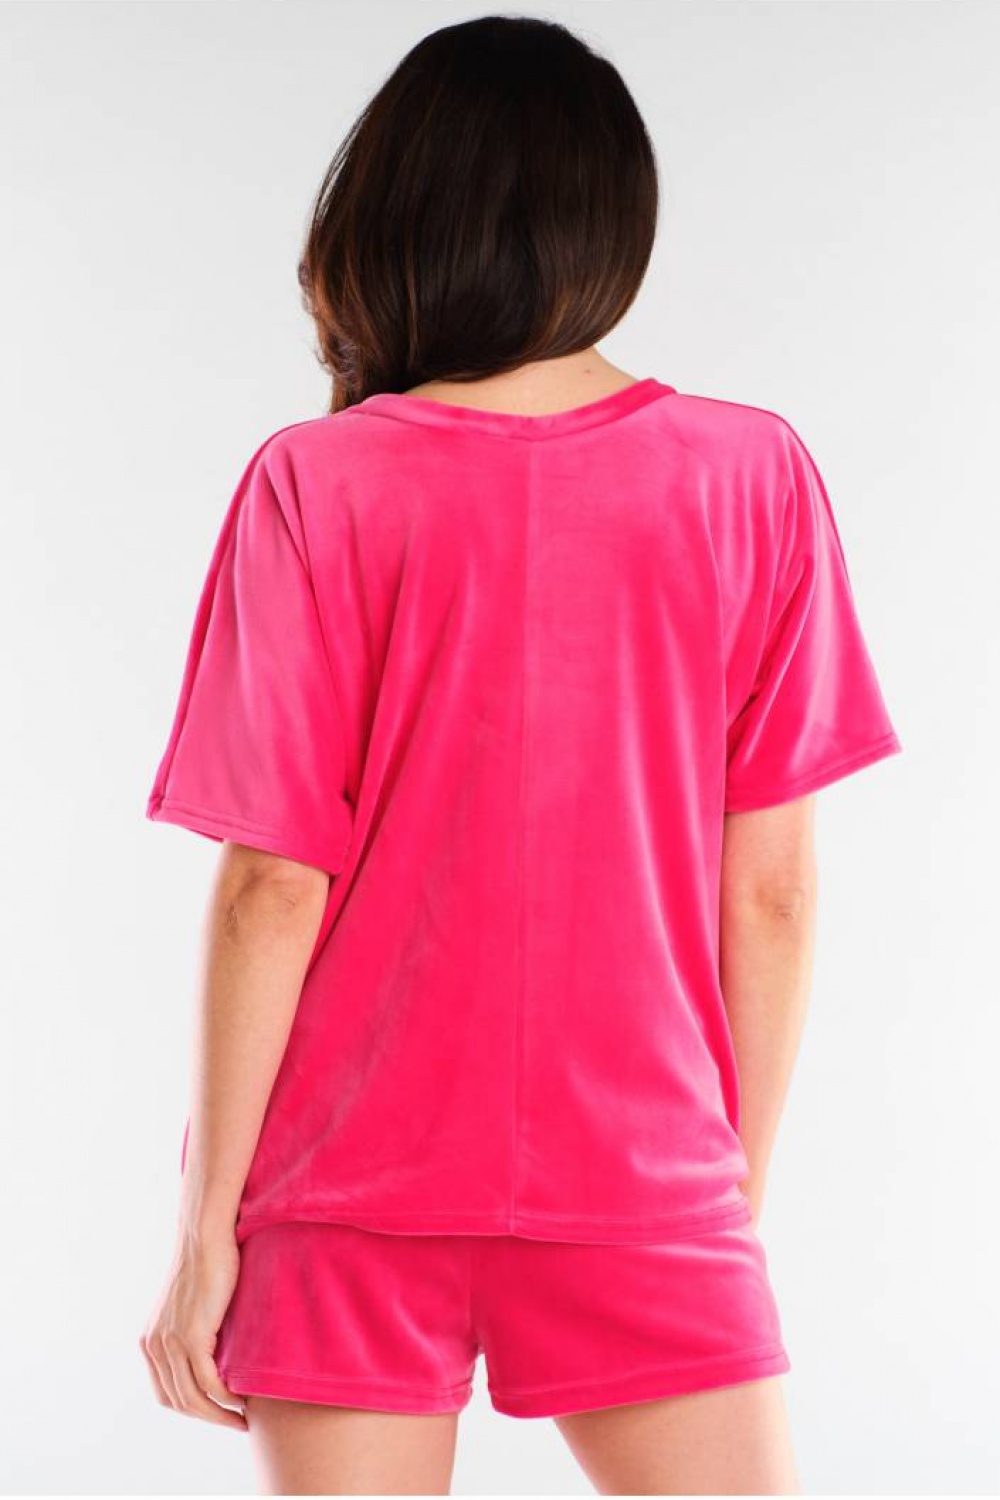  Shorts model 154792 awama  pink